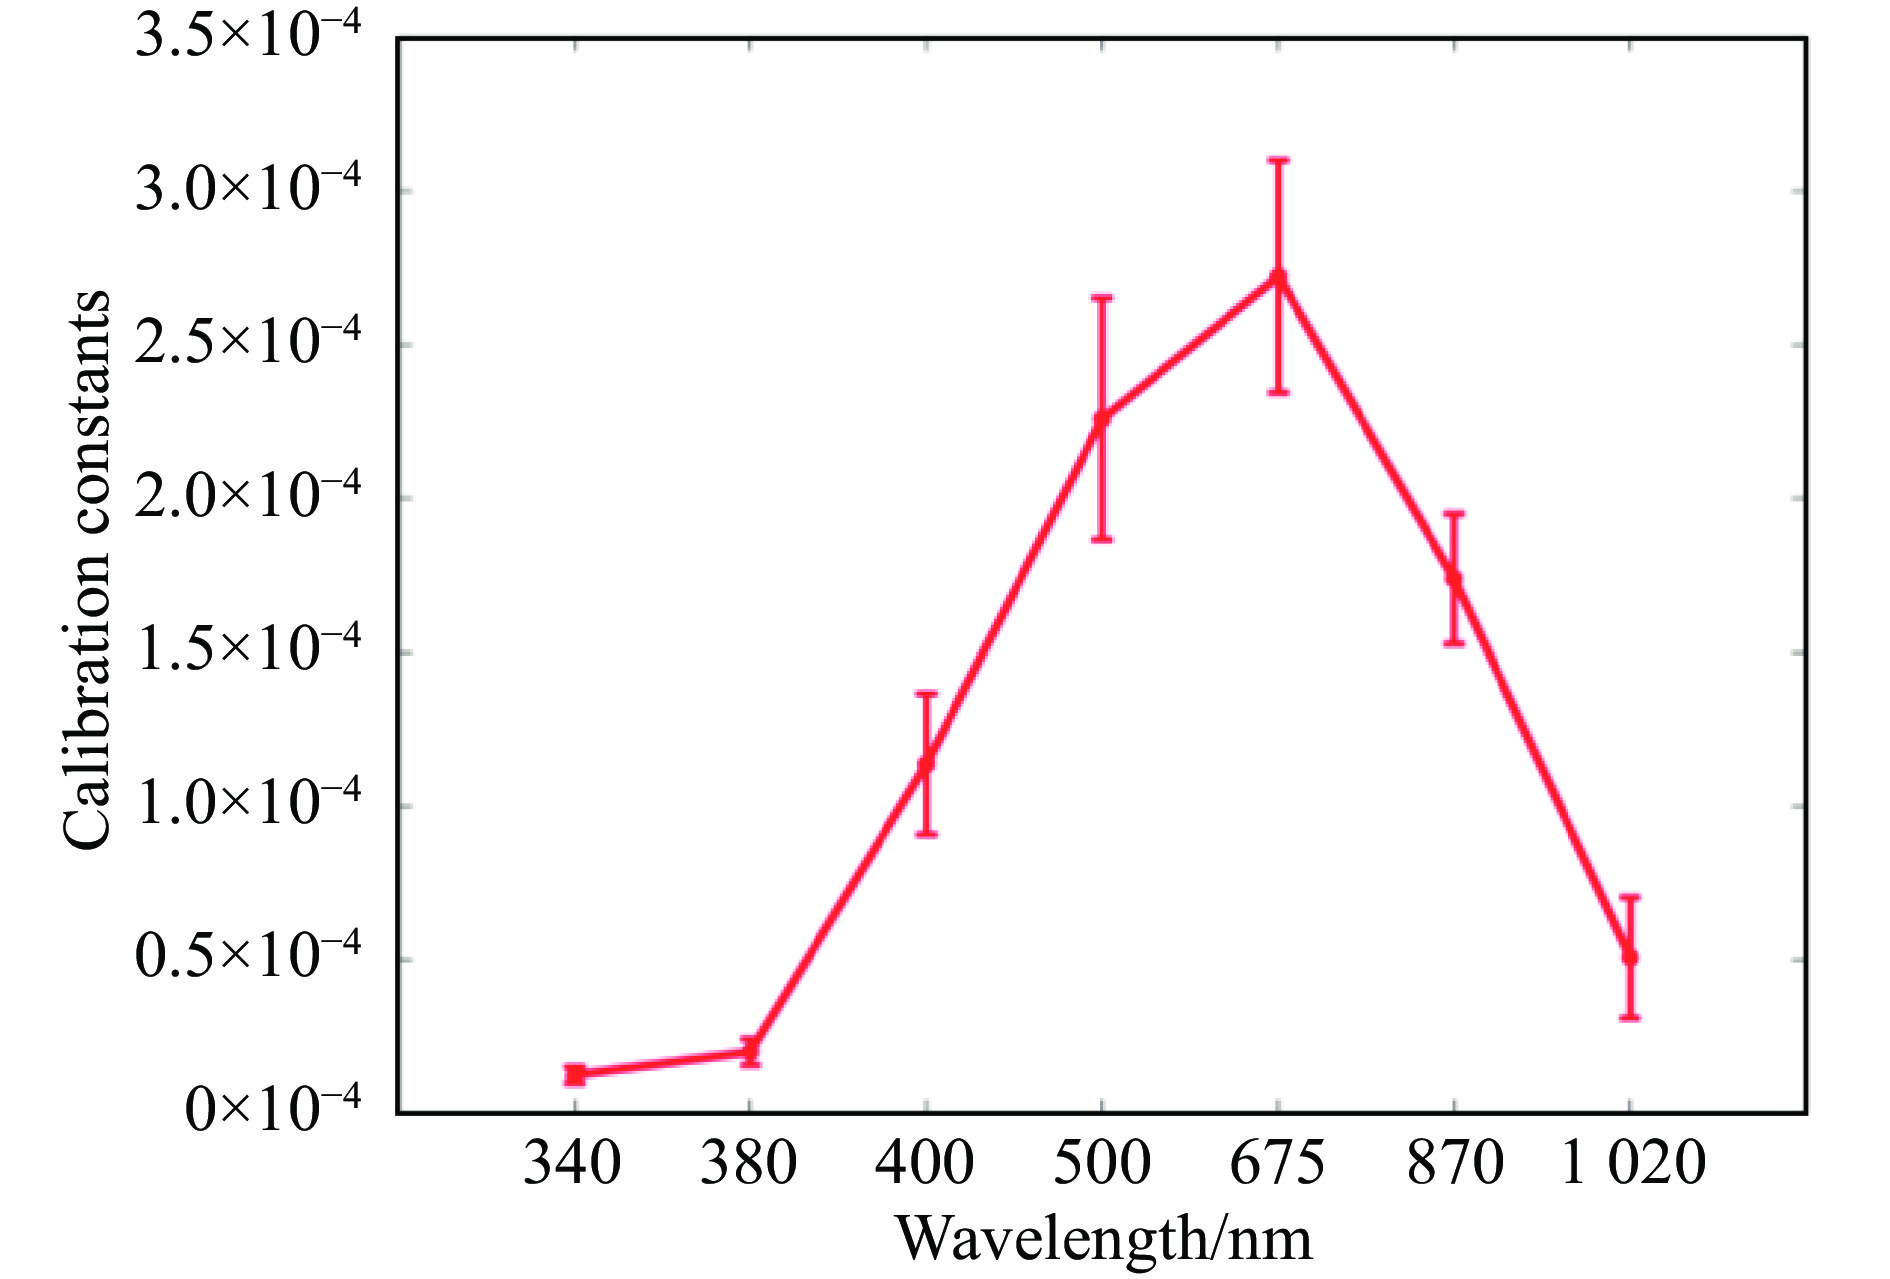 Range distribution of calibration values of each wavelength